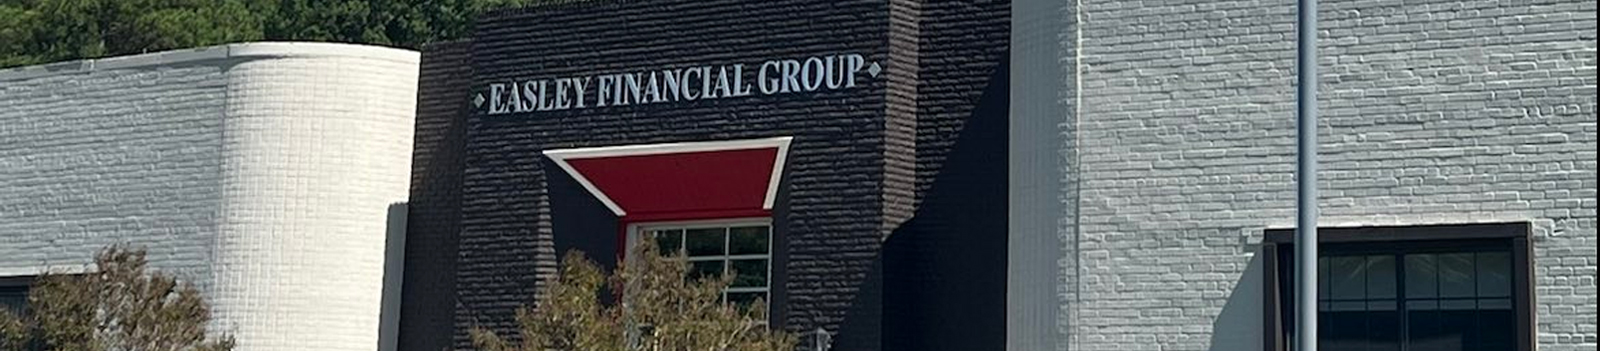 easley financial group